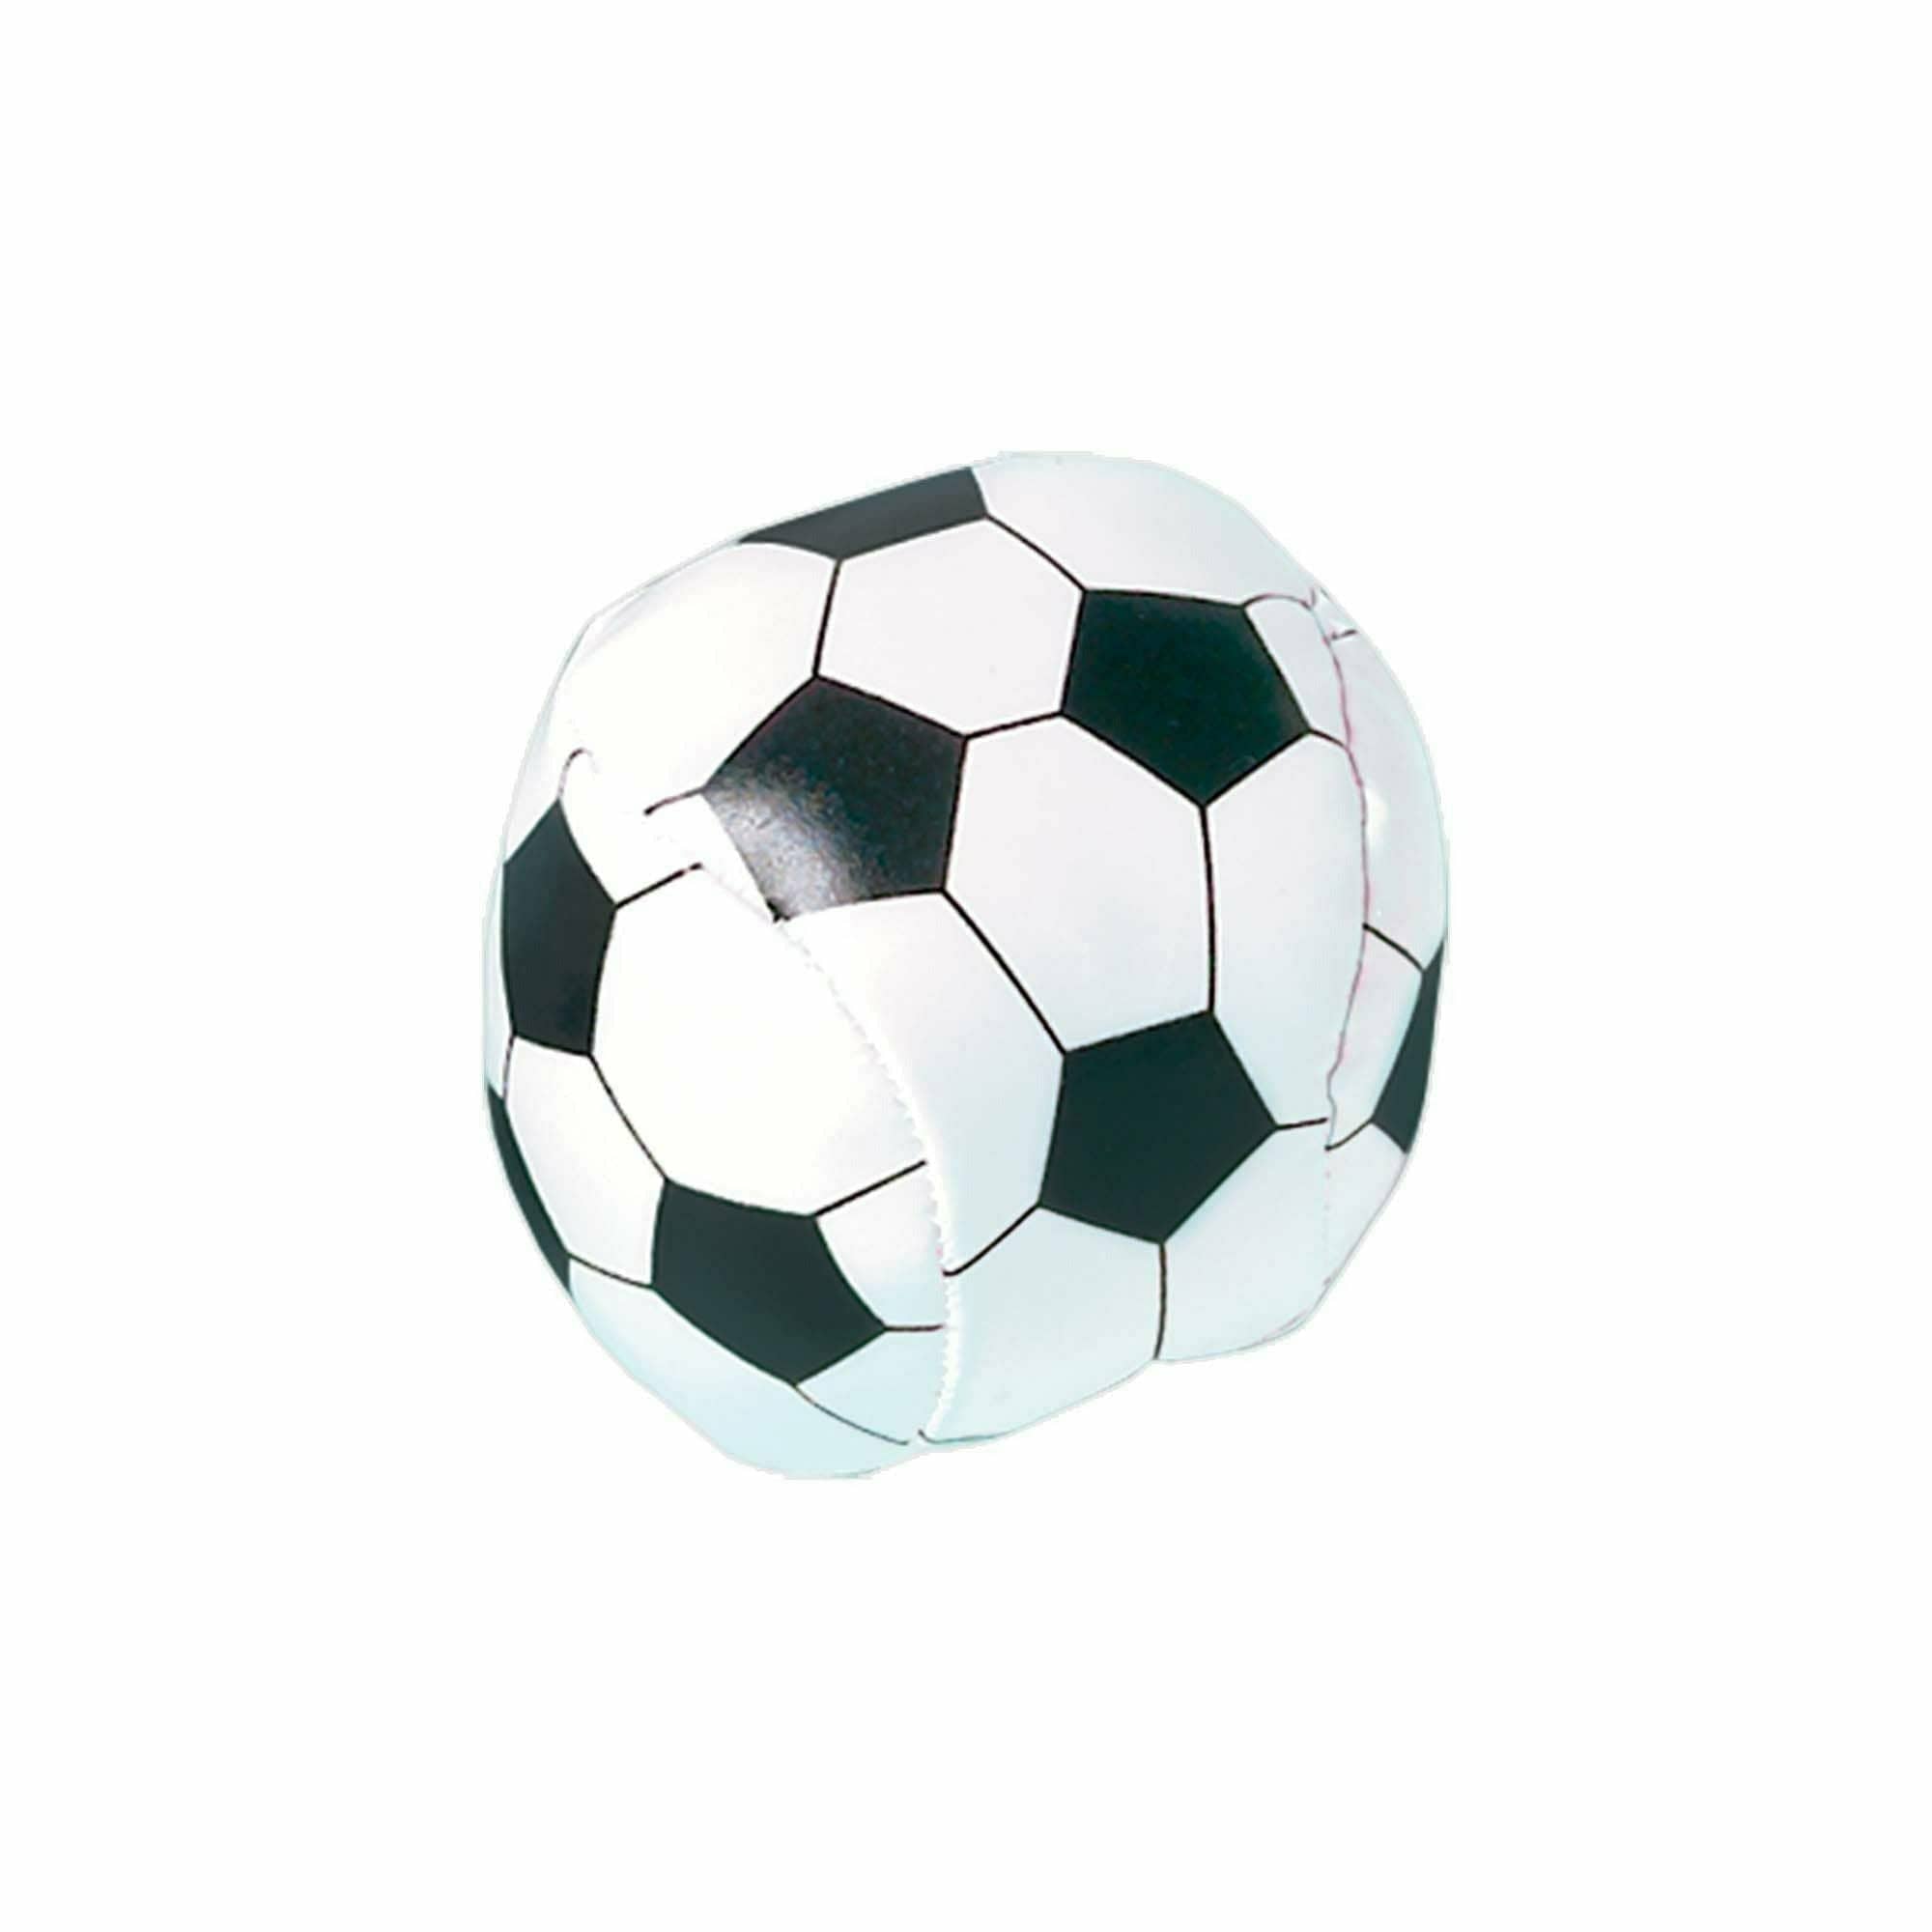 Amscan THEME: SPORTS Soft Soccer Ball